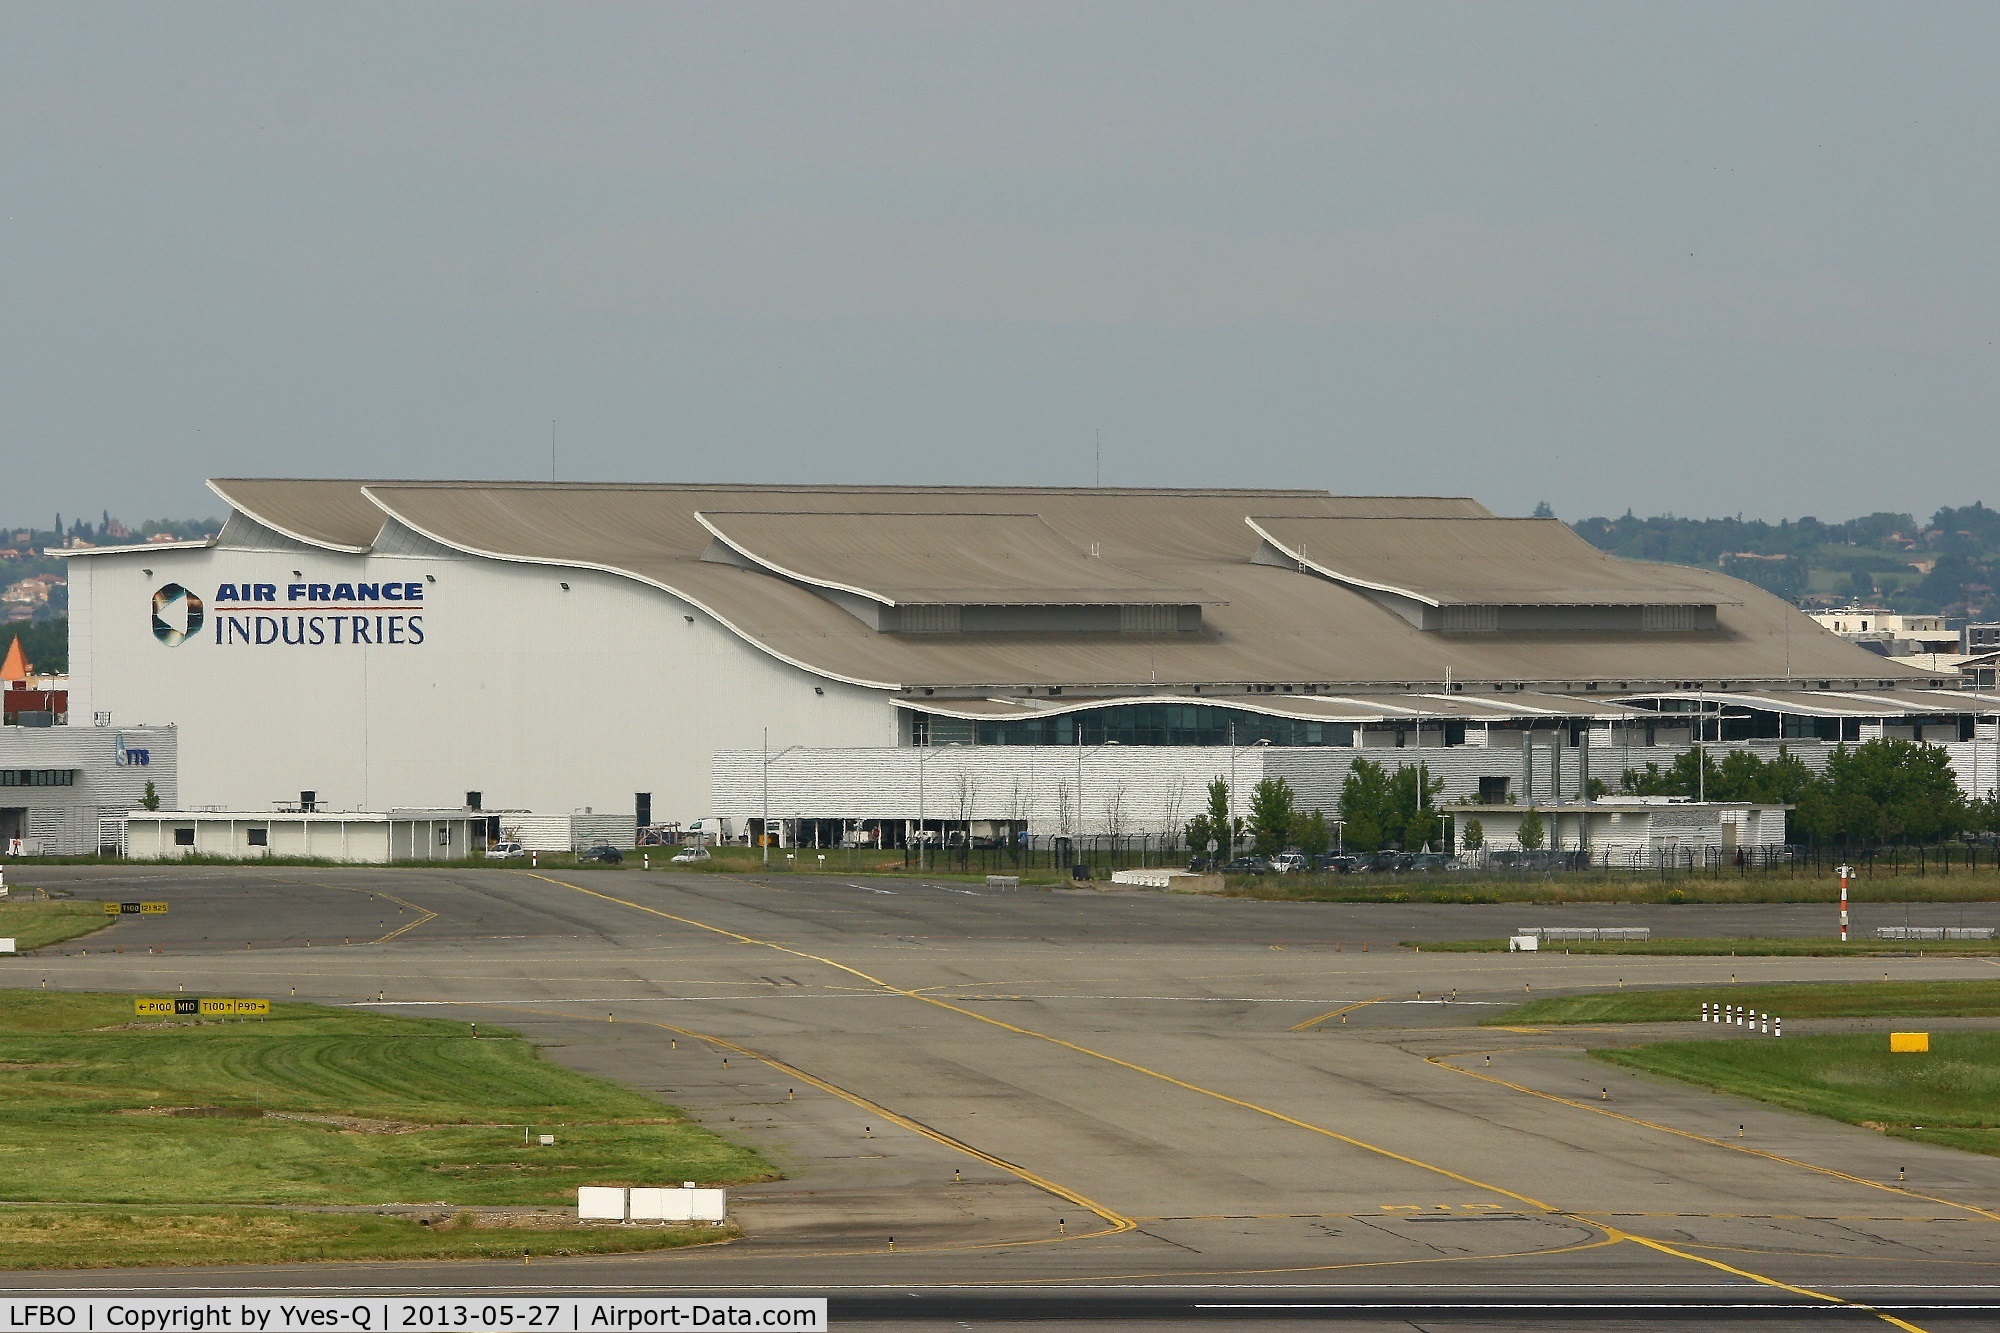 Toulouse Airport, Blagnac Airport France (LFBO) - Air France Industries Workshops, Toulouse-Blagnac Airport (LFBO-TLS)